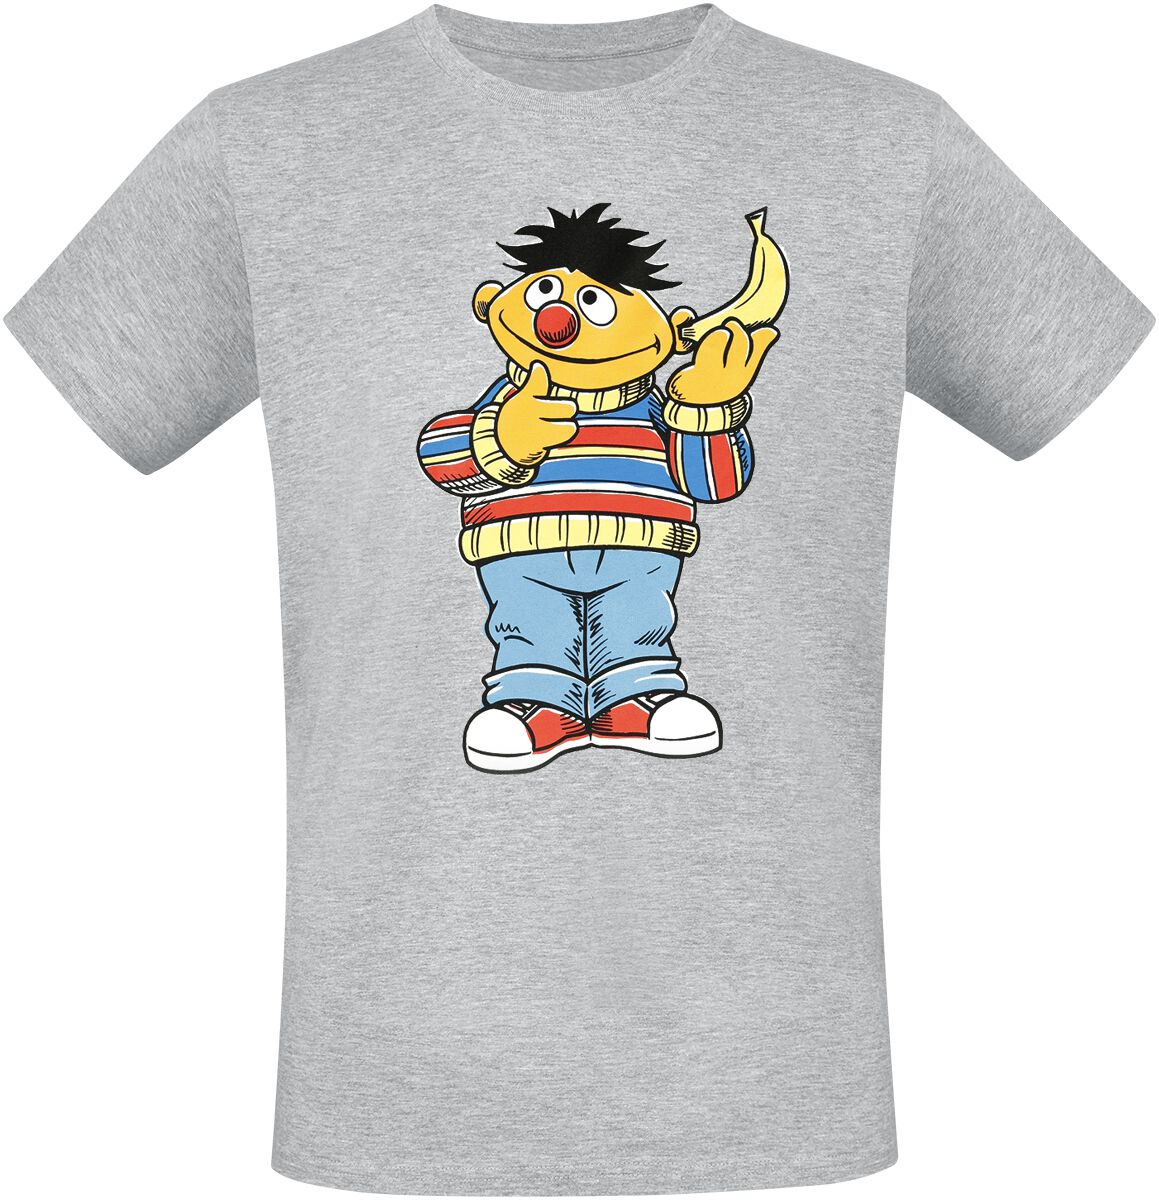 Sesamstraße Ernie - Banane T-Shirt grau in XL